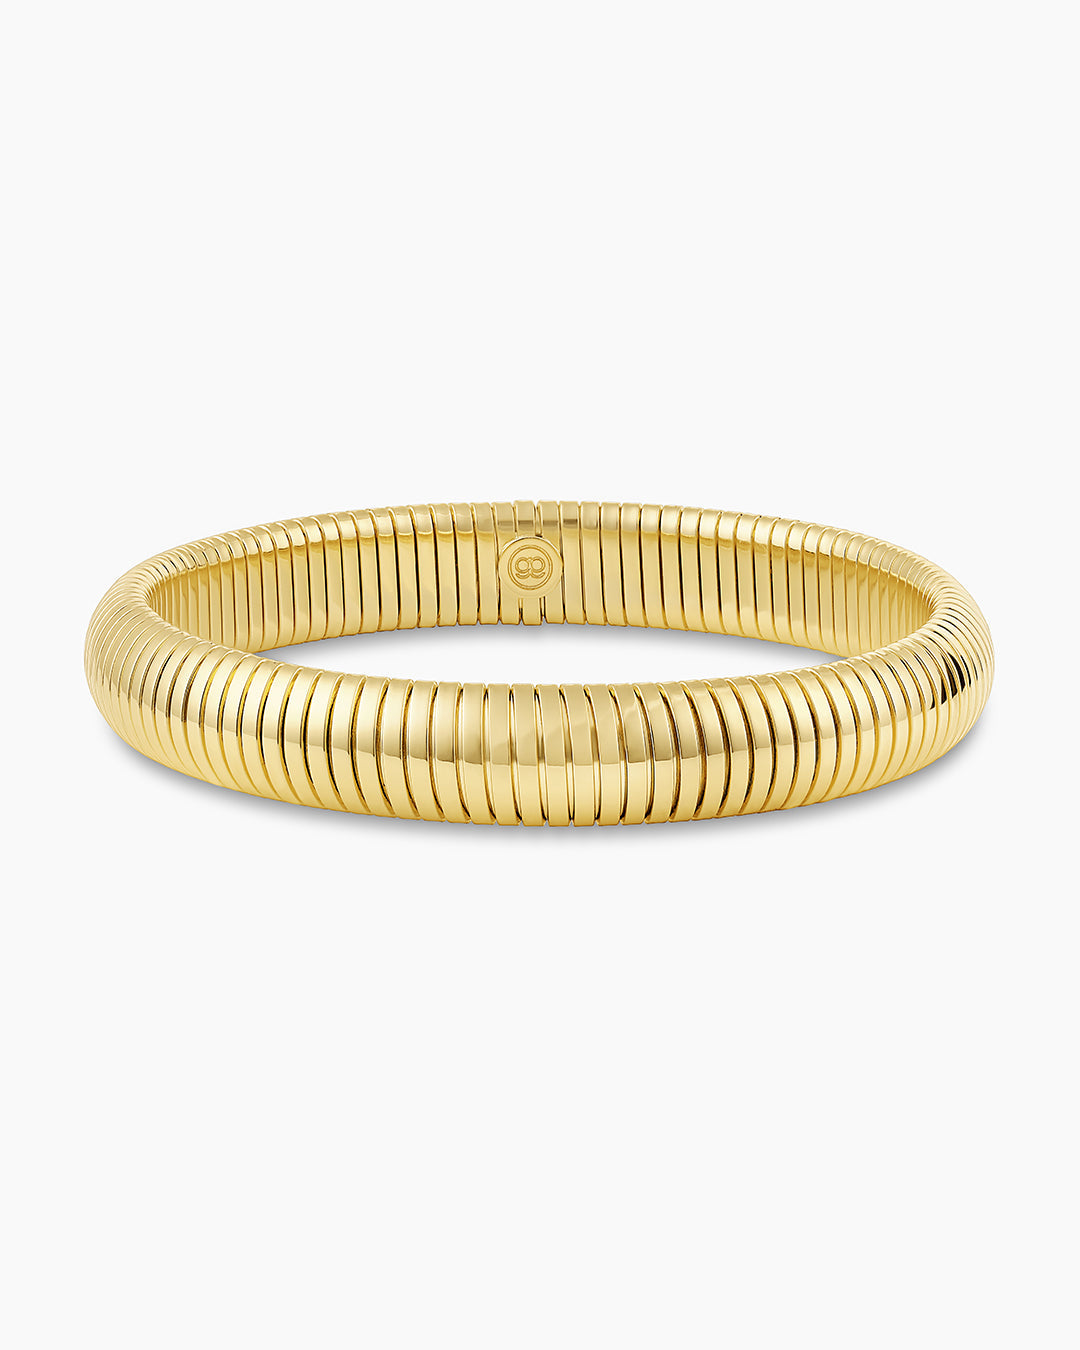 Paseo Cuff Bracelet in 4mm/Gold Plated, Women's by Gorjana